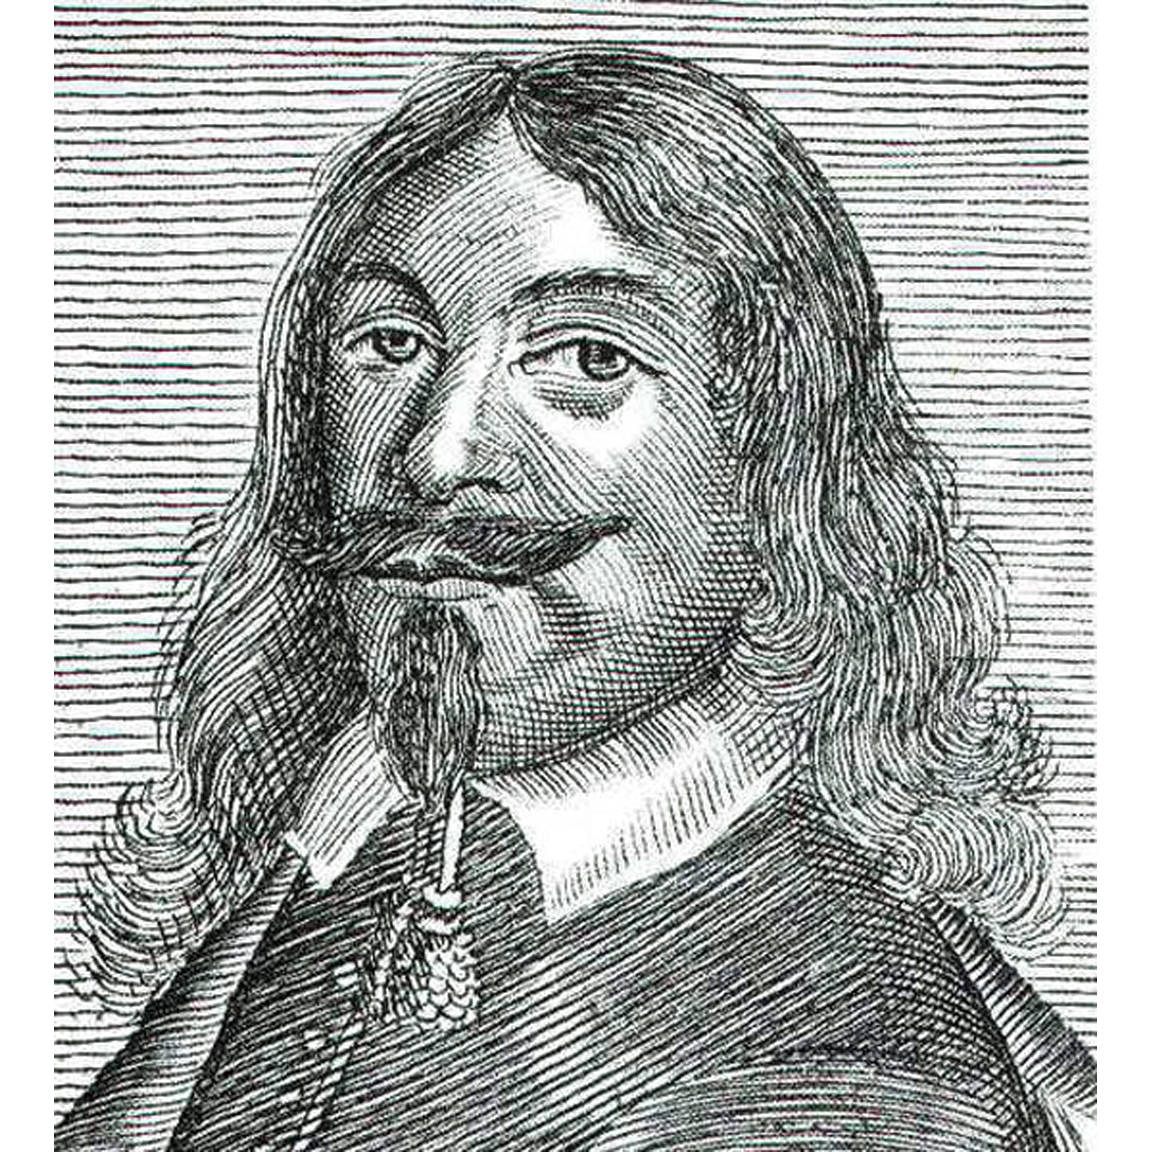 BARTHOLIN-CasparSecundus(1655-1736)